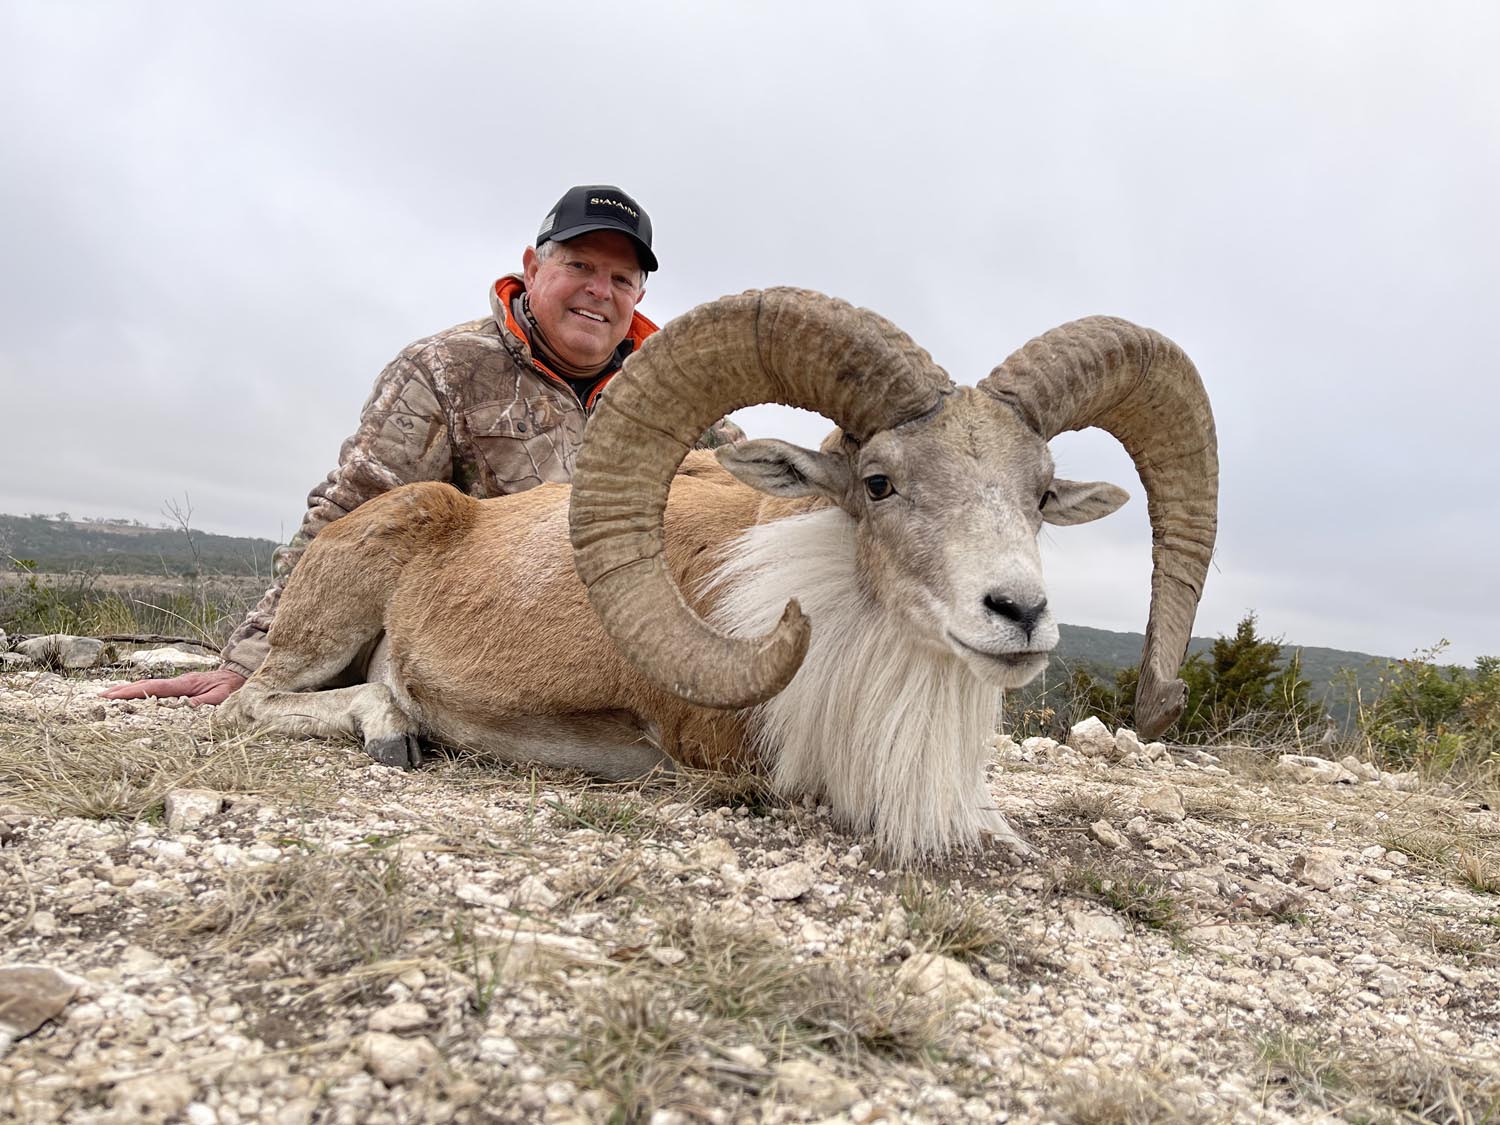 Armenian Mouflon available to hunt